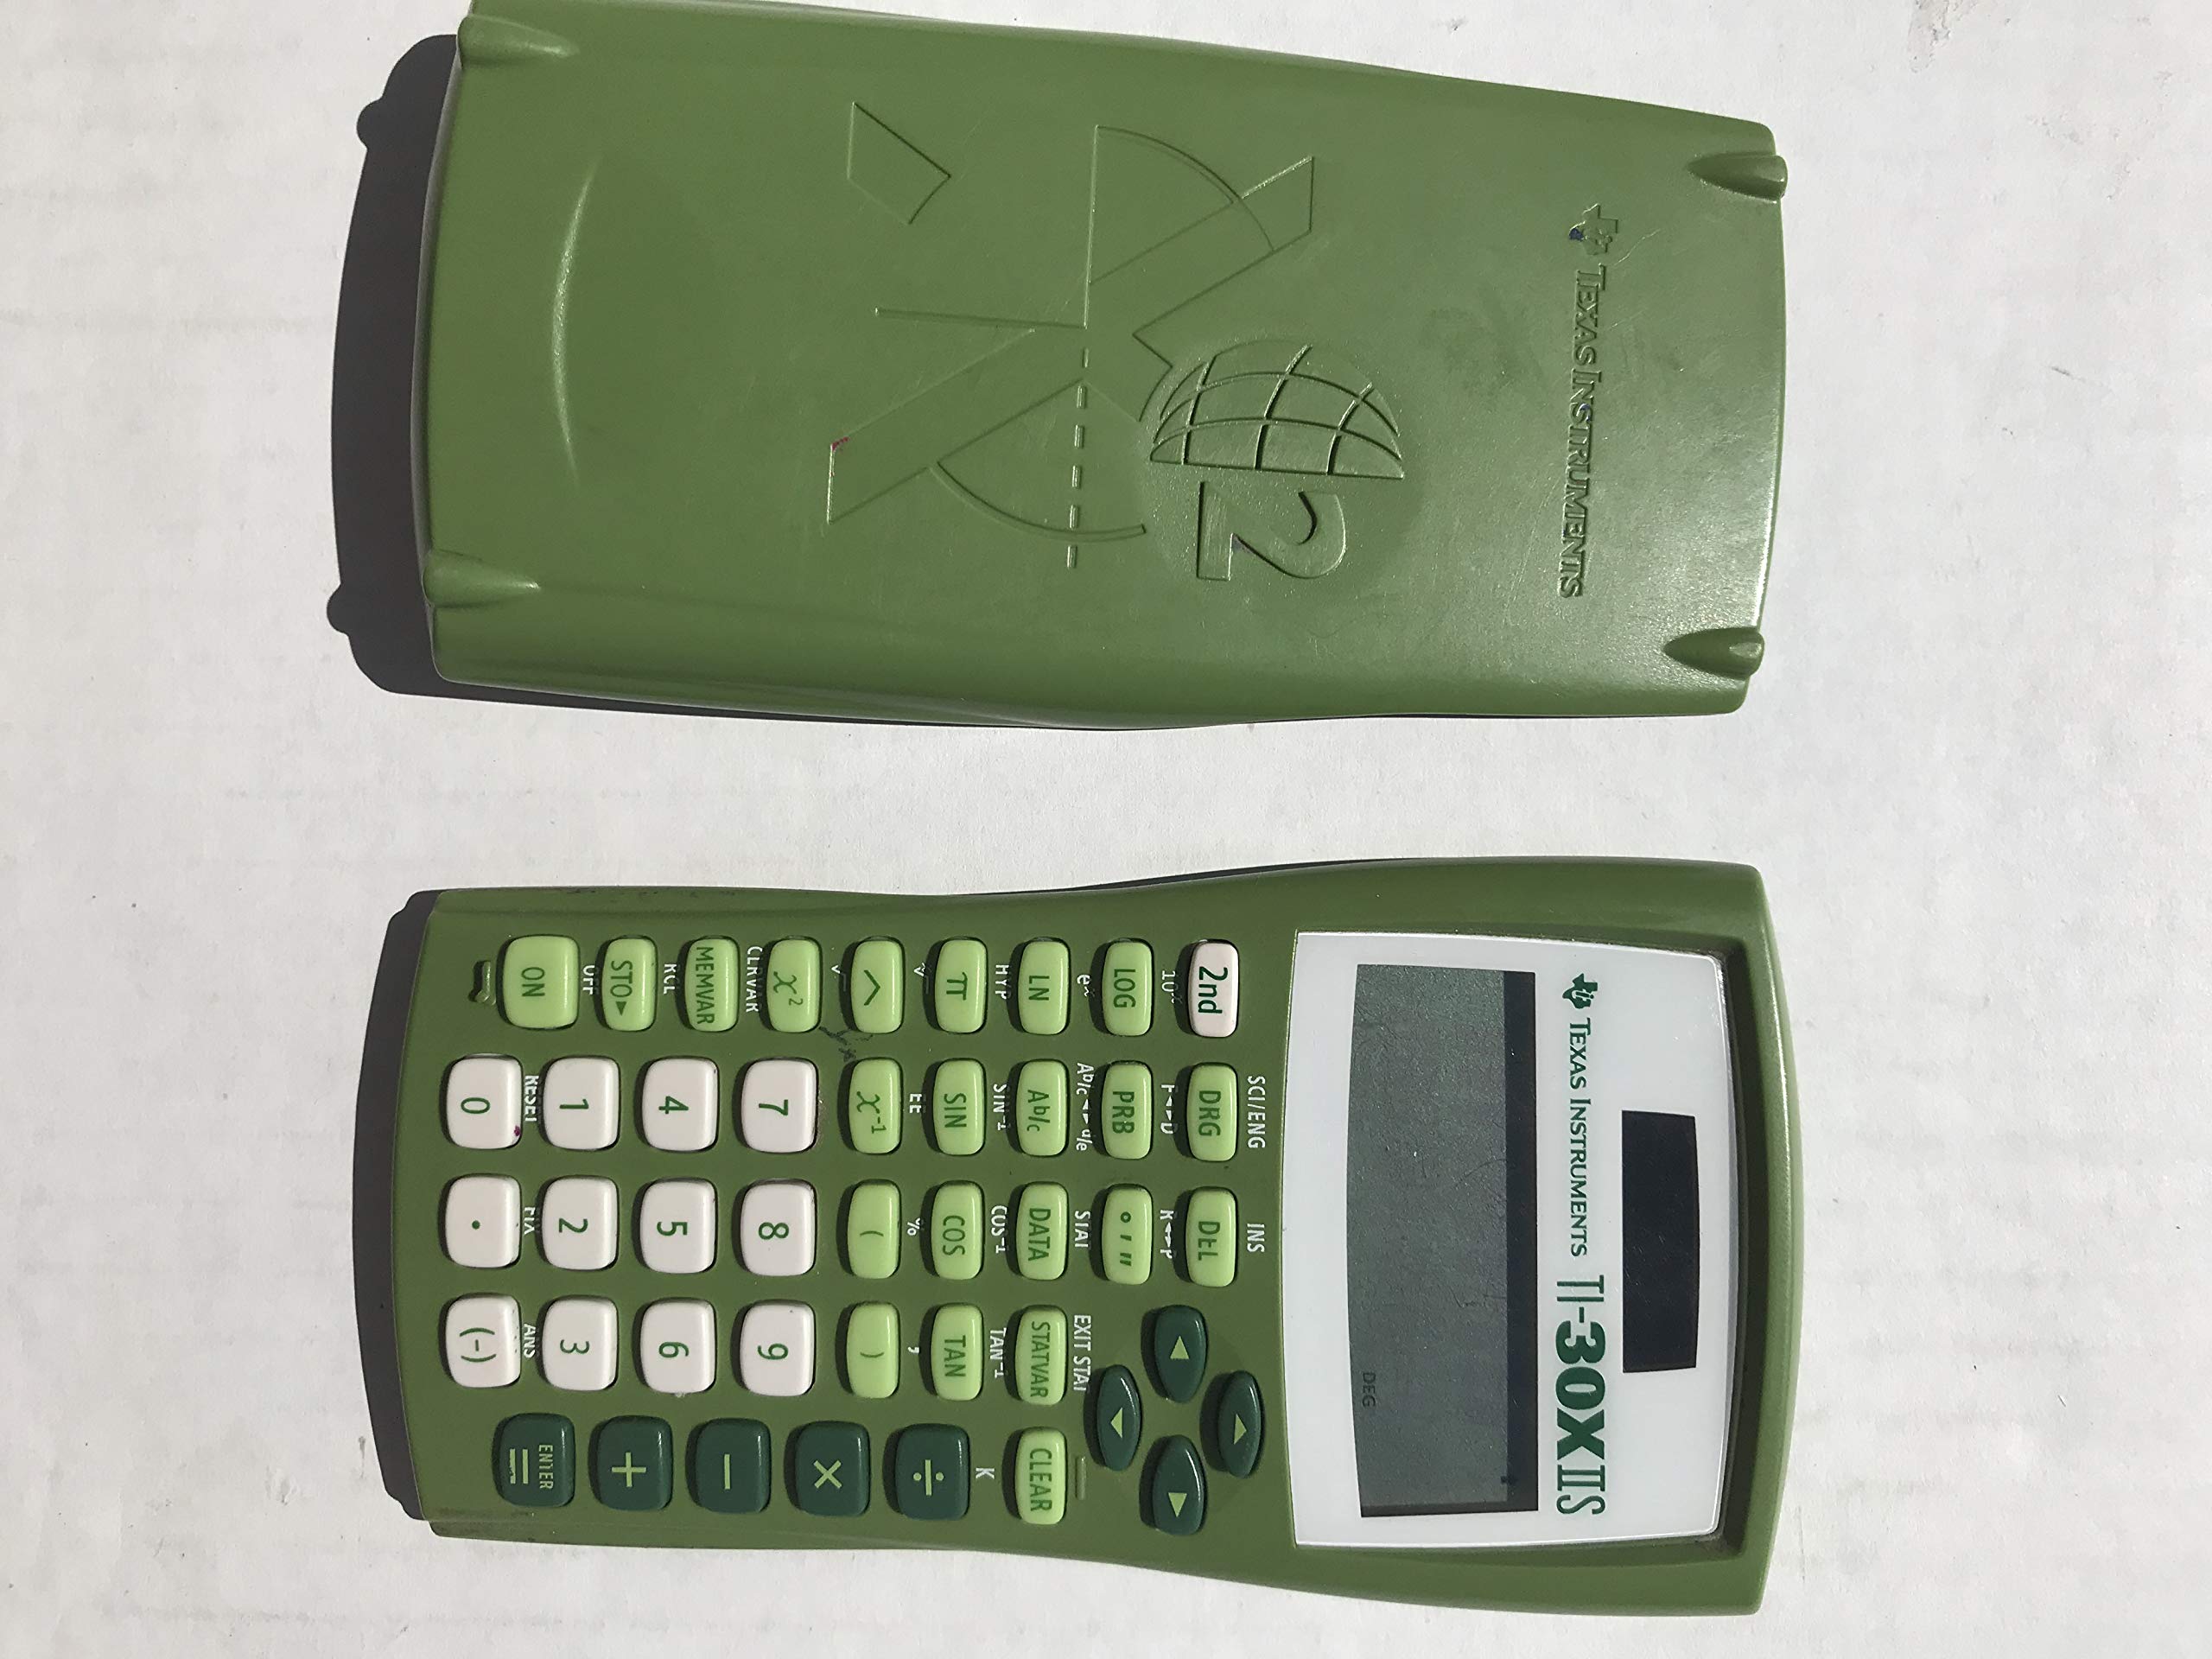 Texas Instruments TI-30X IIS Solar Scientific Calculator